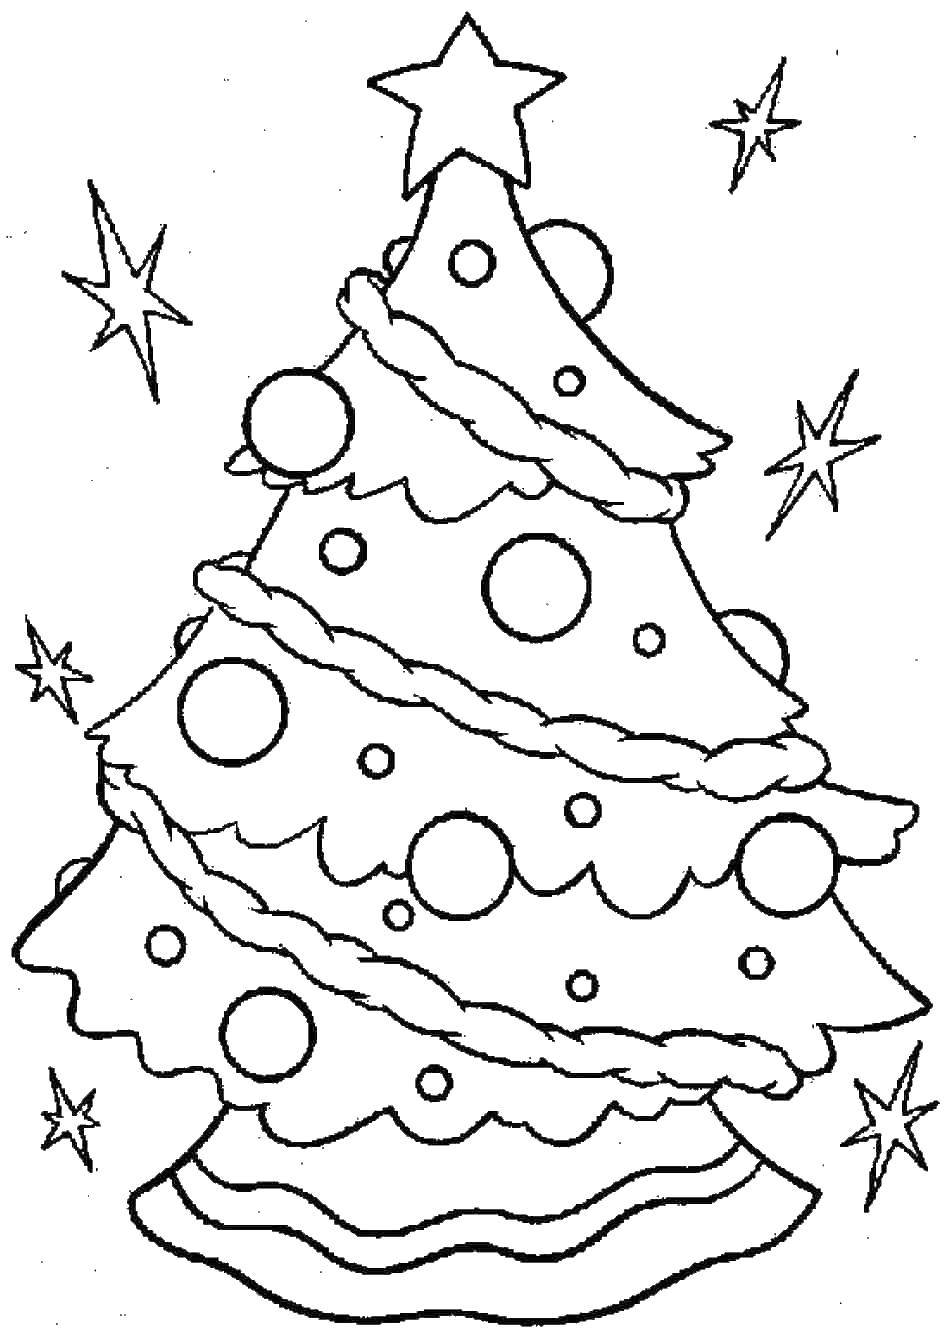 Coloring Dressed Christmas tree. Category Christmas. Tags:  tree, star, tree.